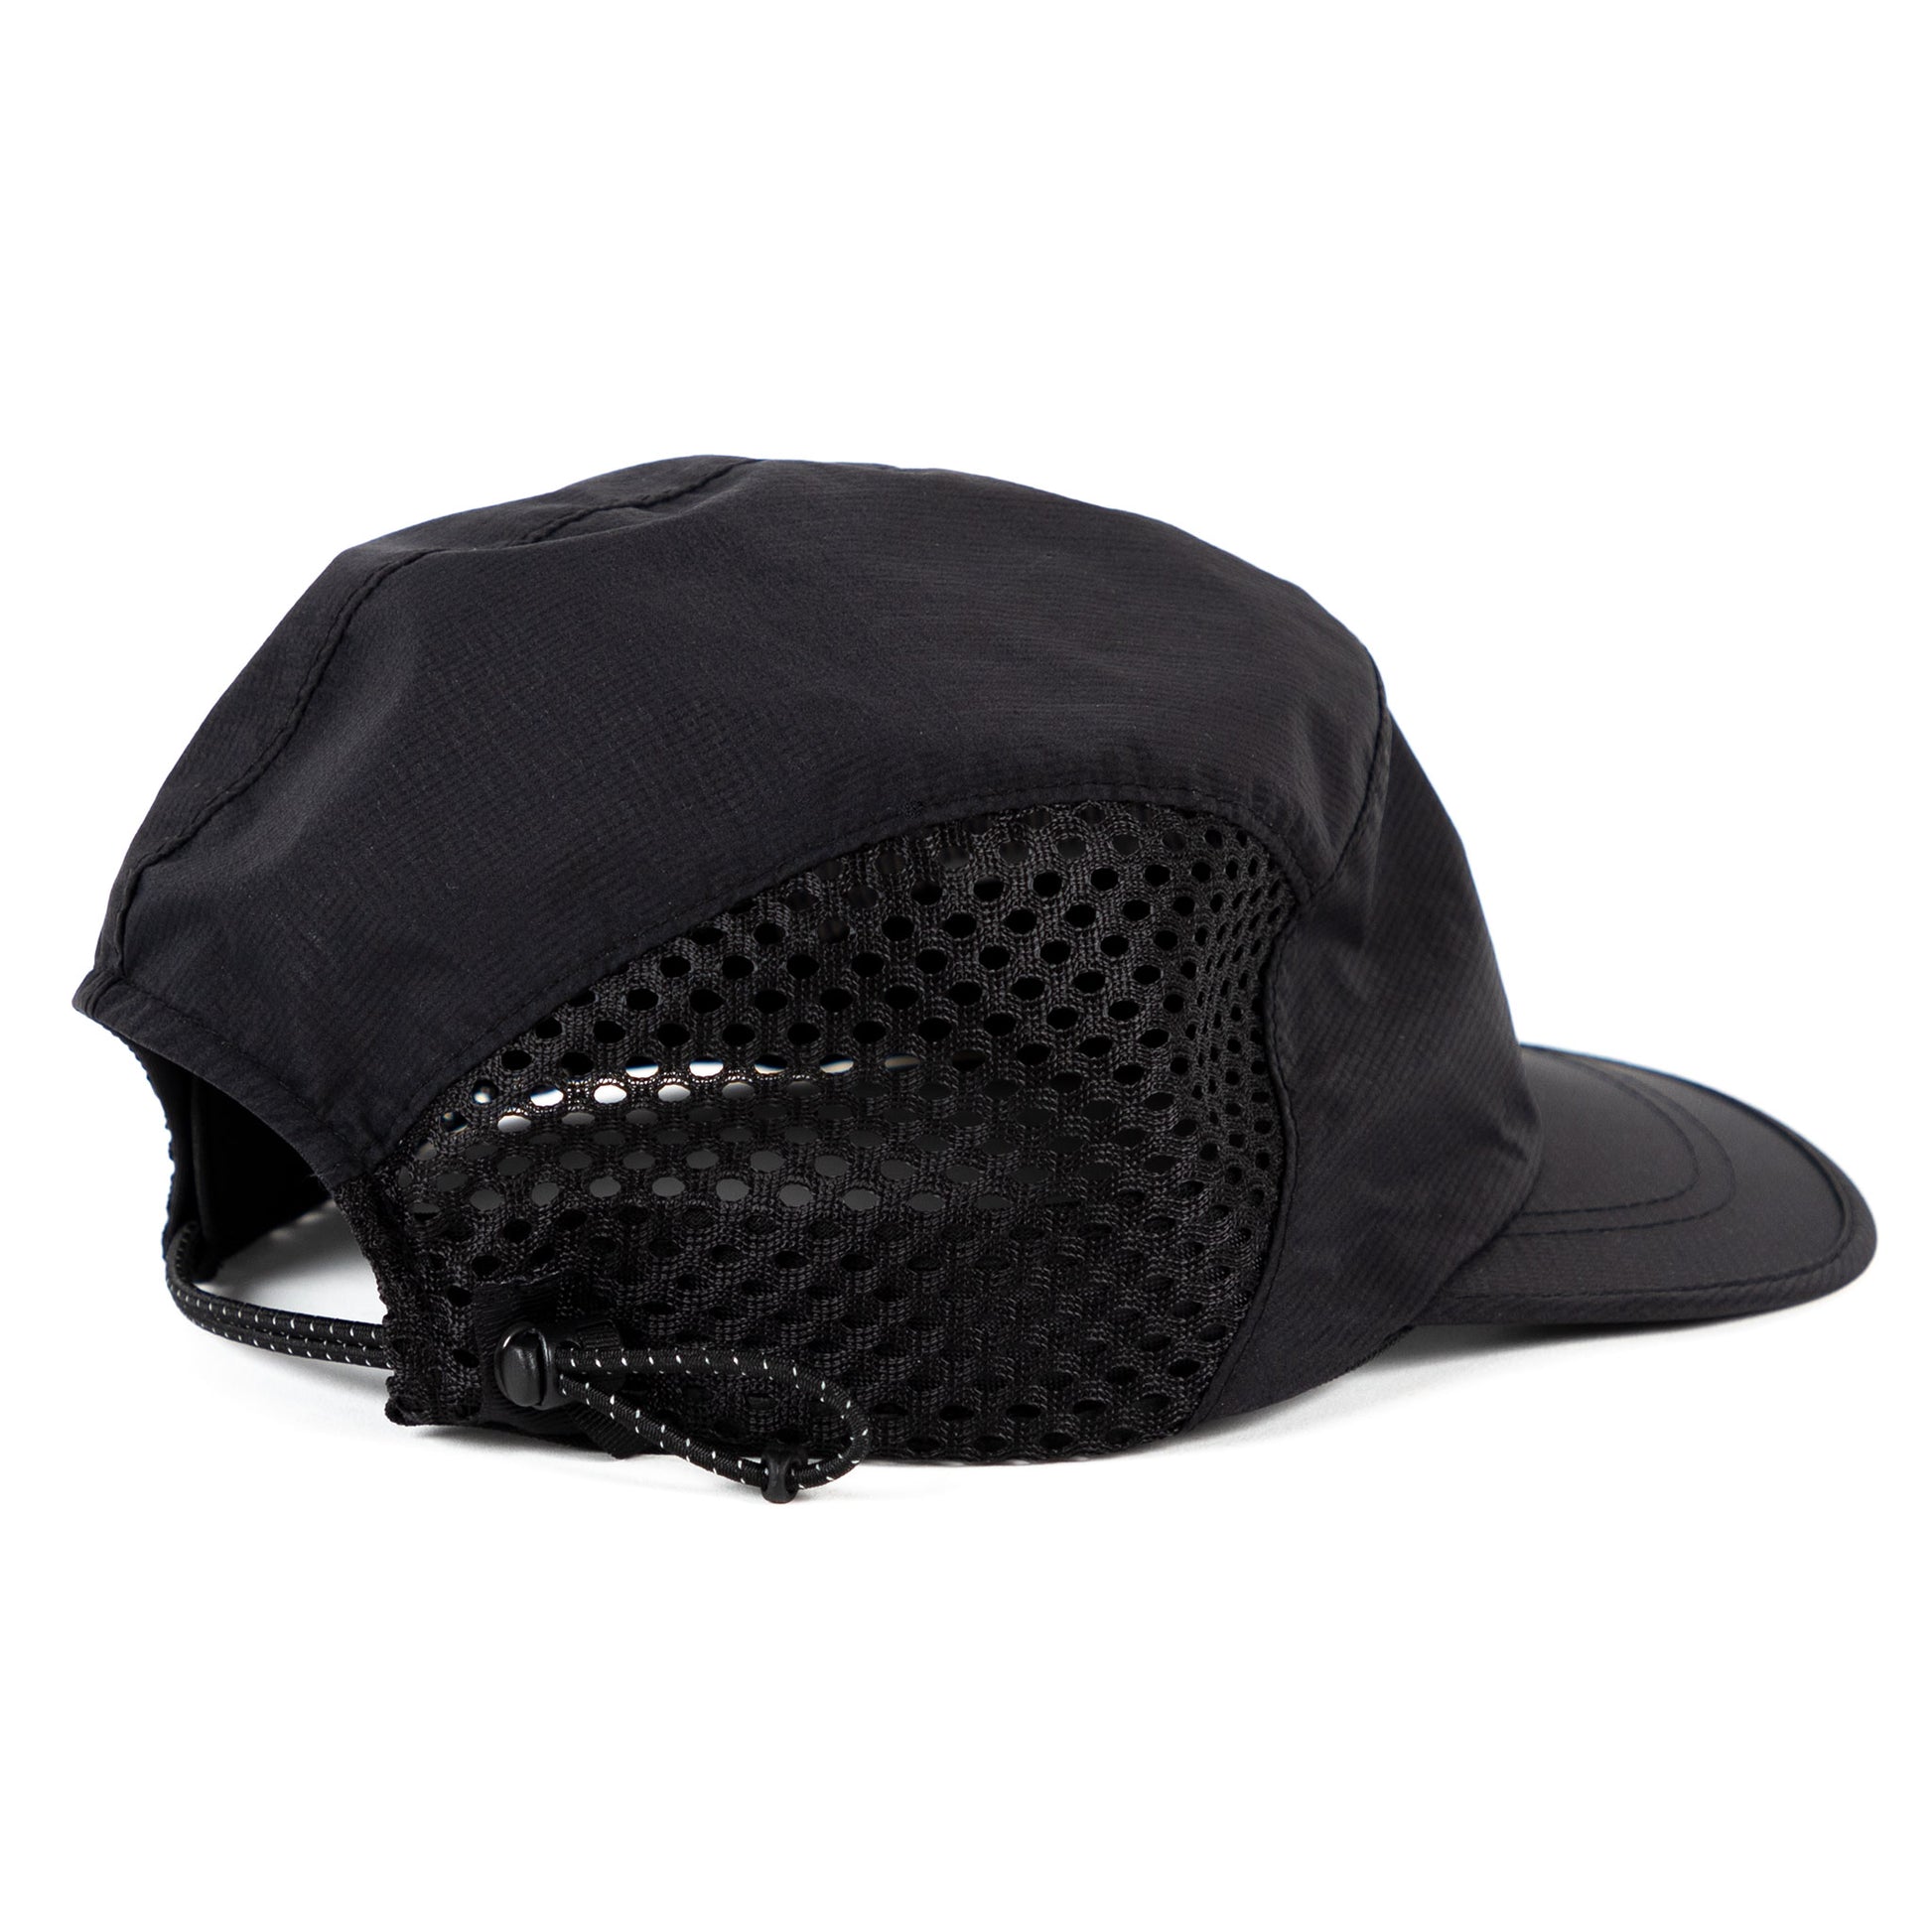 Goldwin short brim mesh cap black